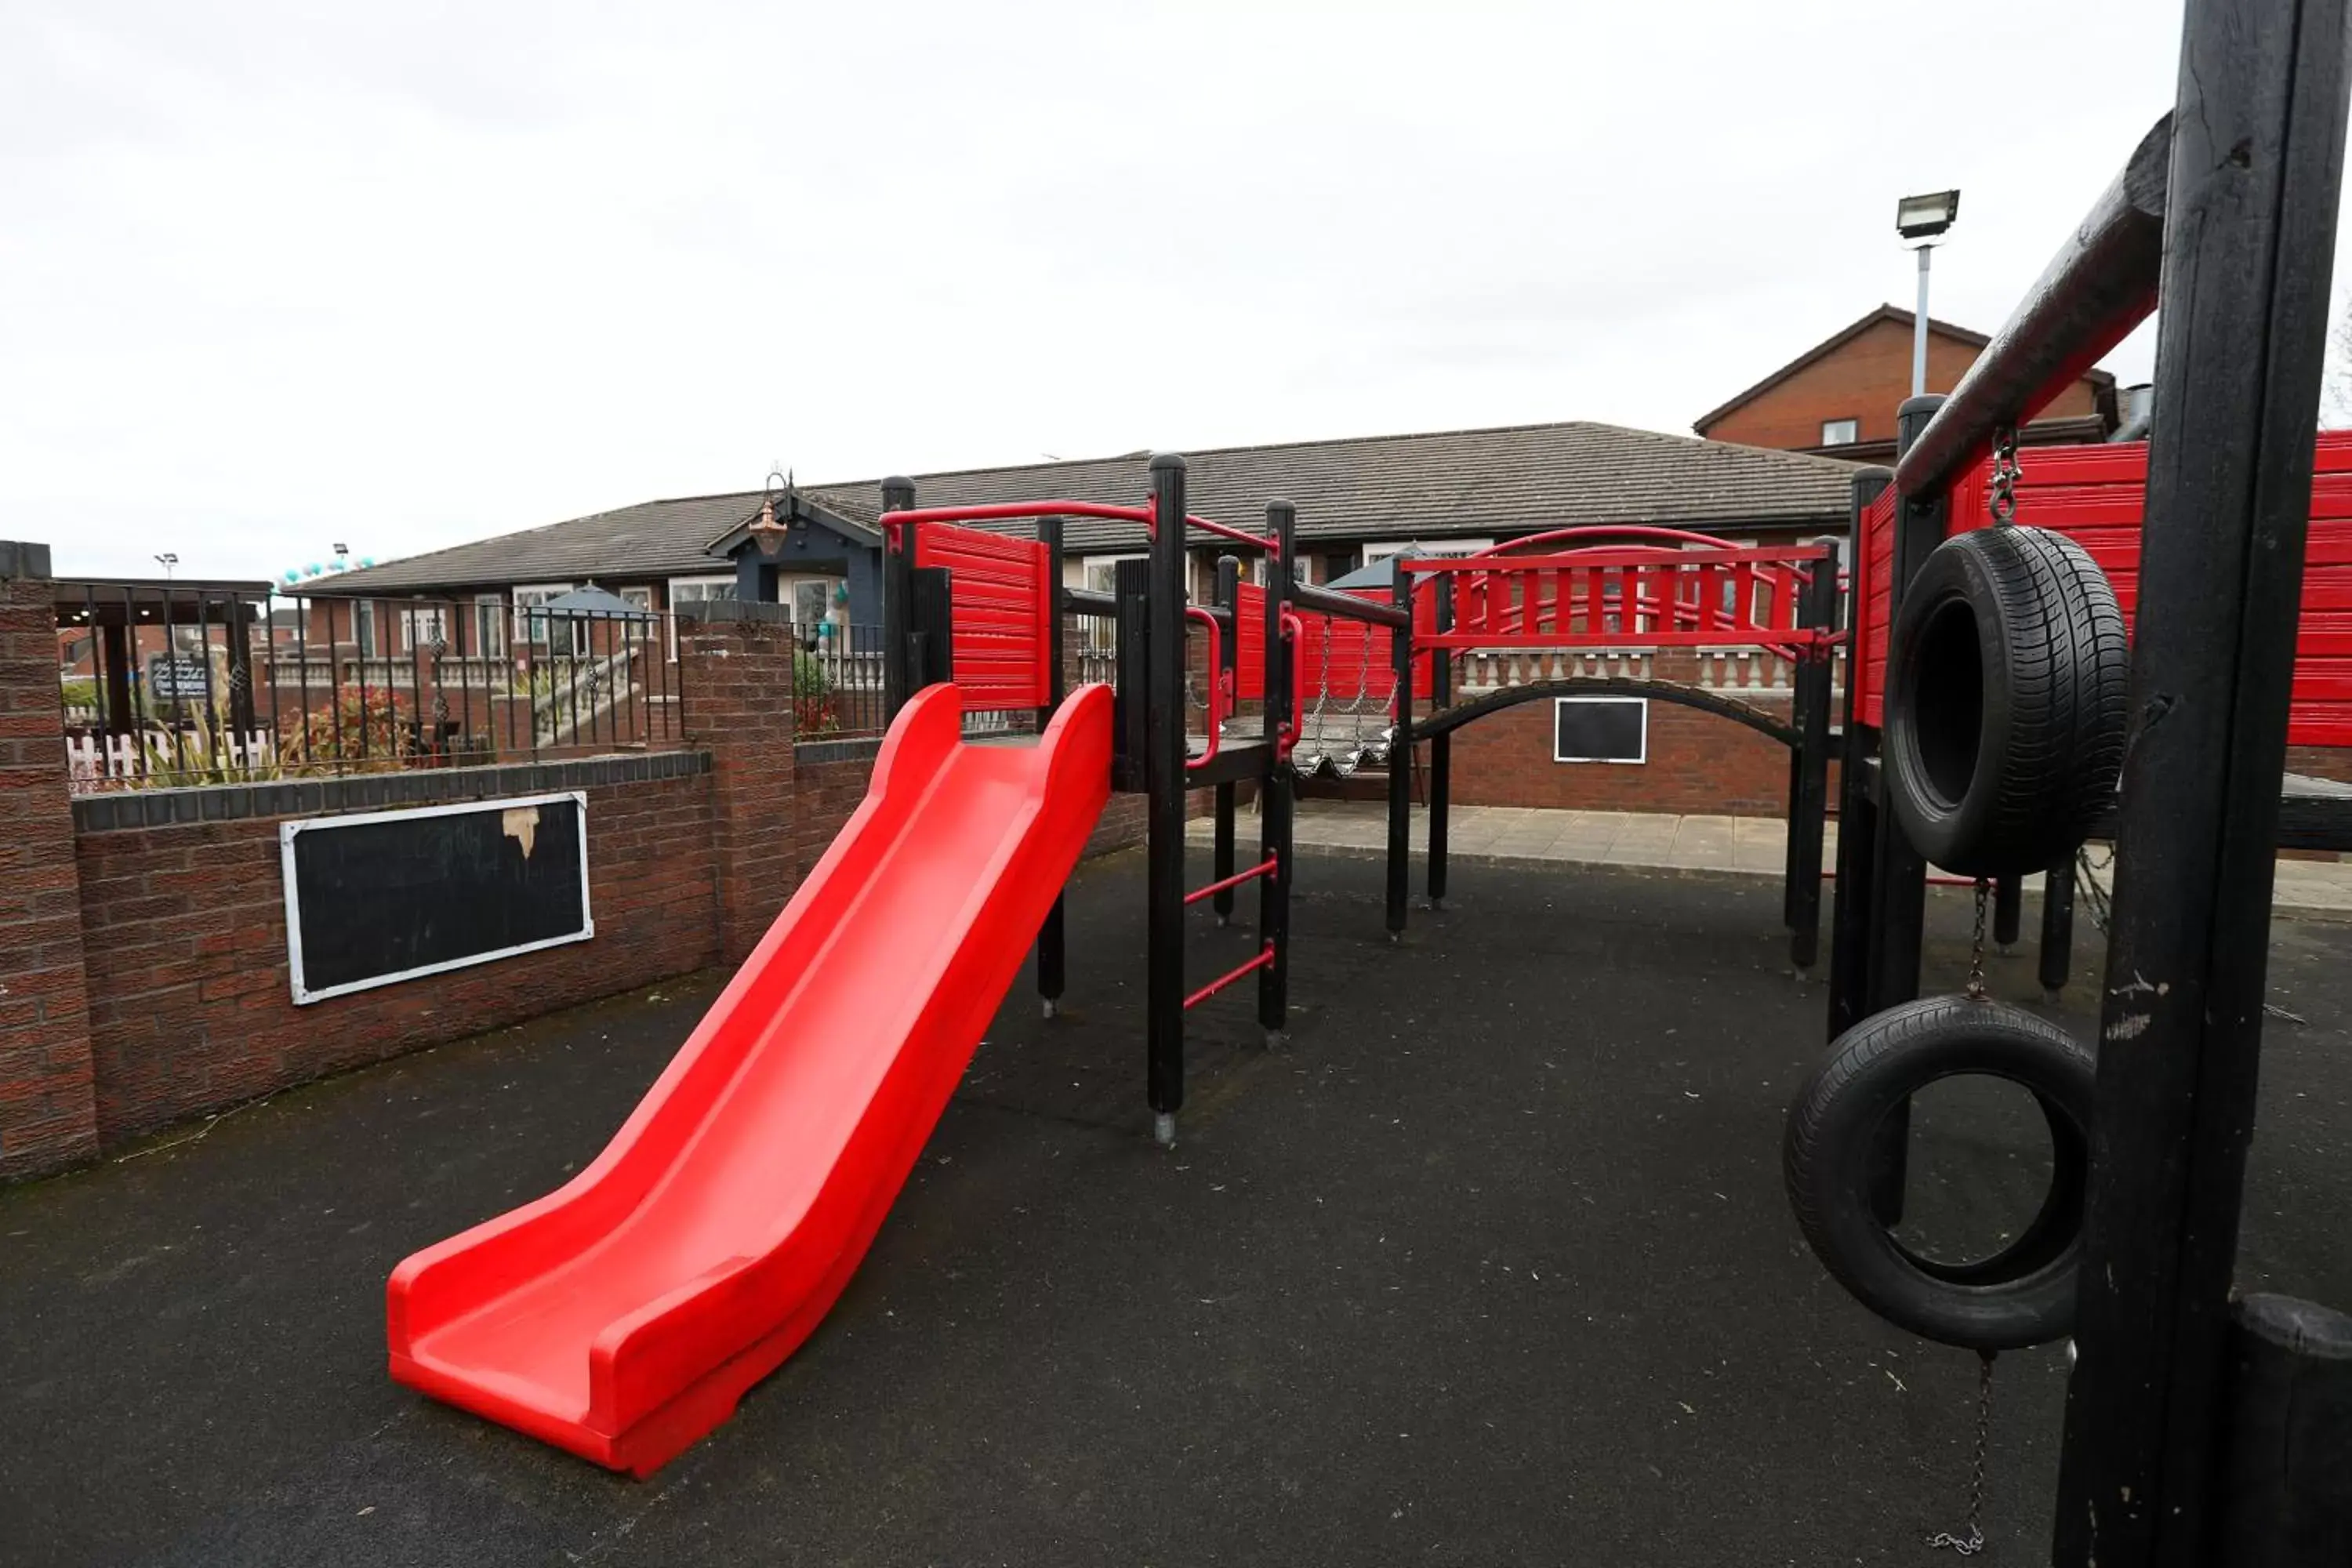 Children play ground, Children's Play Area in Boundary, Alfreton by Marston's Inns